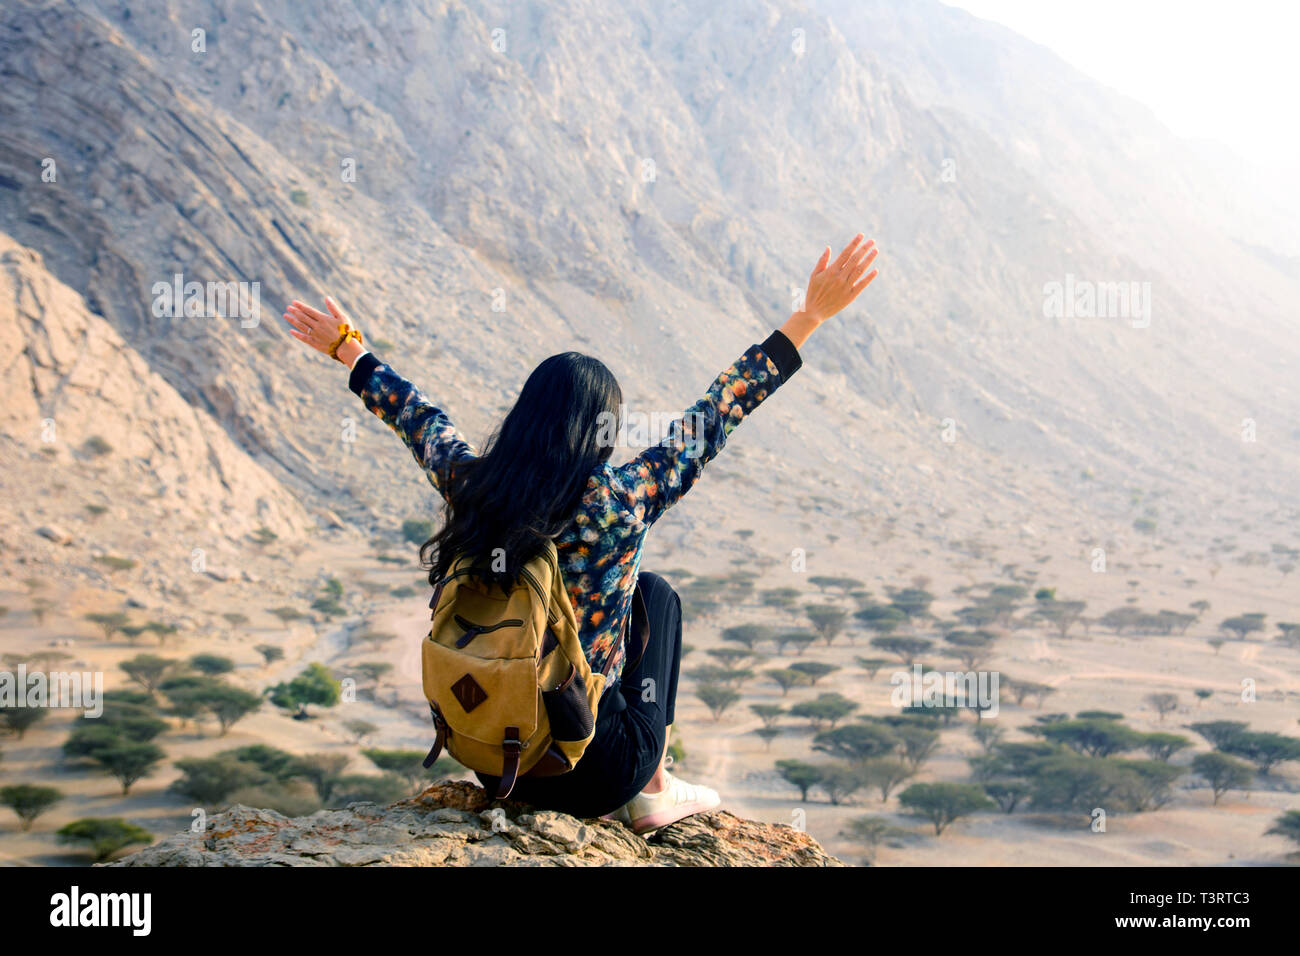 Woman enjoying desert scenery on a hiking trip Stock Photo